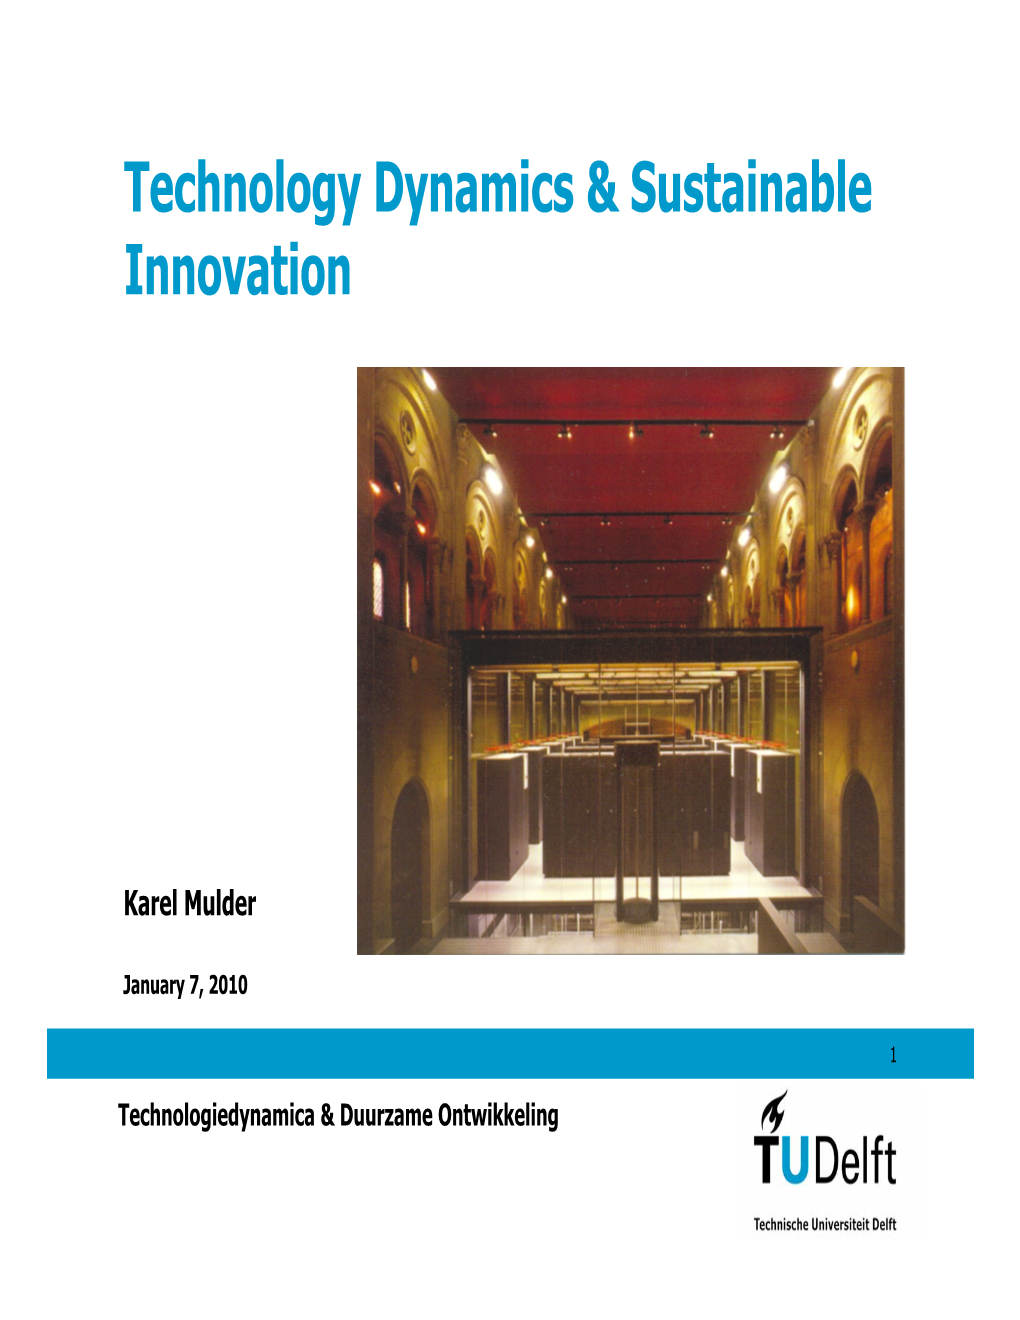 Technology Dynamics & Sustainable Innovation